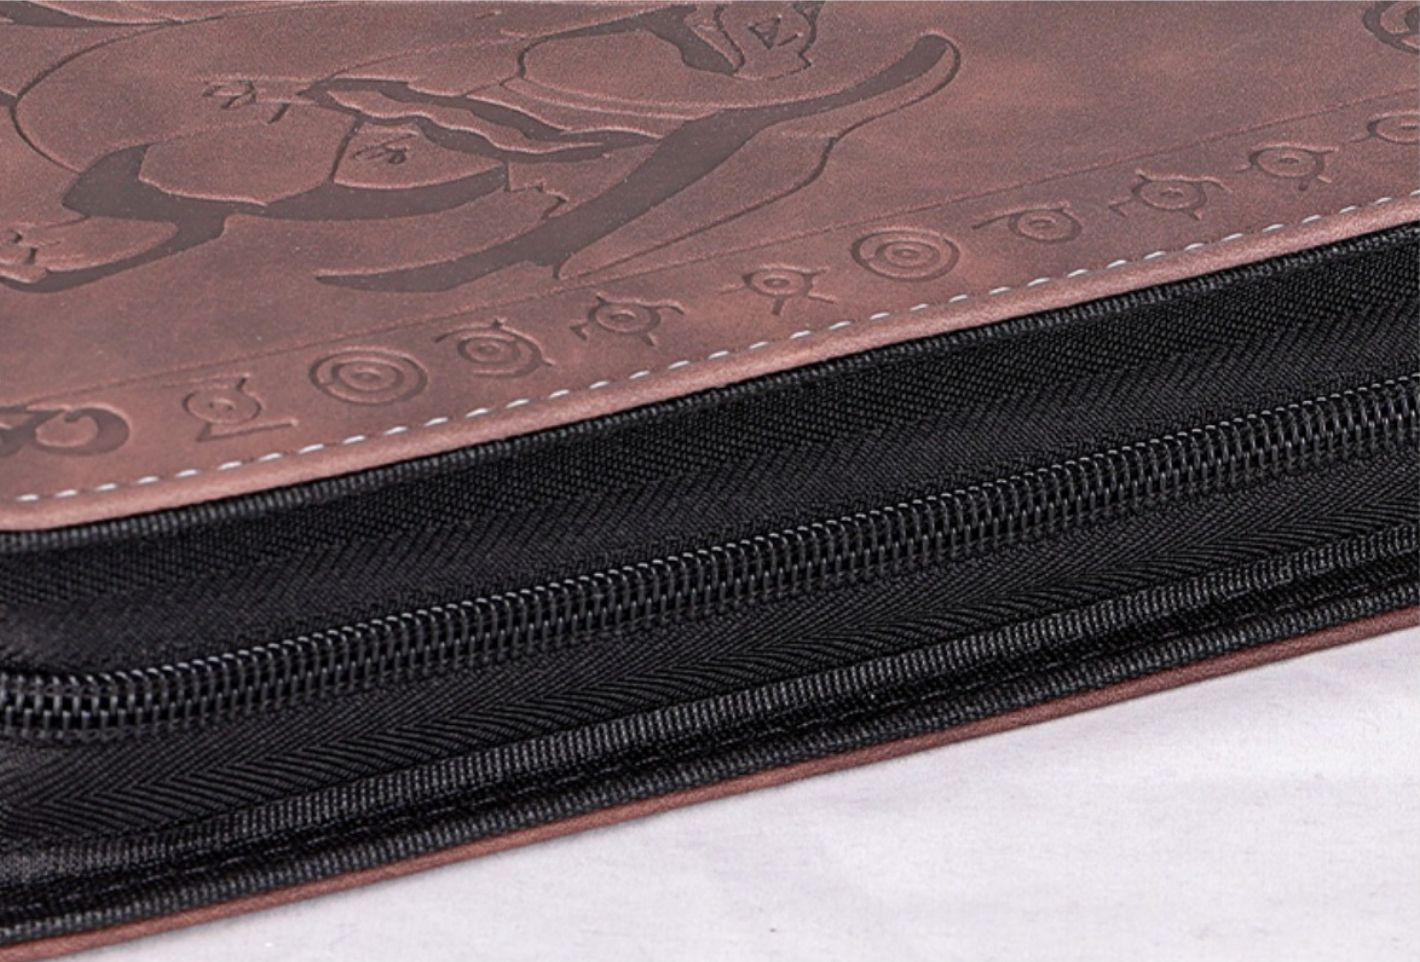 Pokemon Brown 4-Pocket Refillable Embossed PU Leather Trade Binders